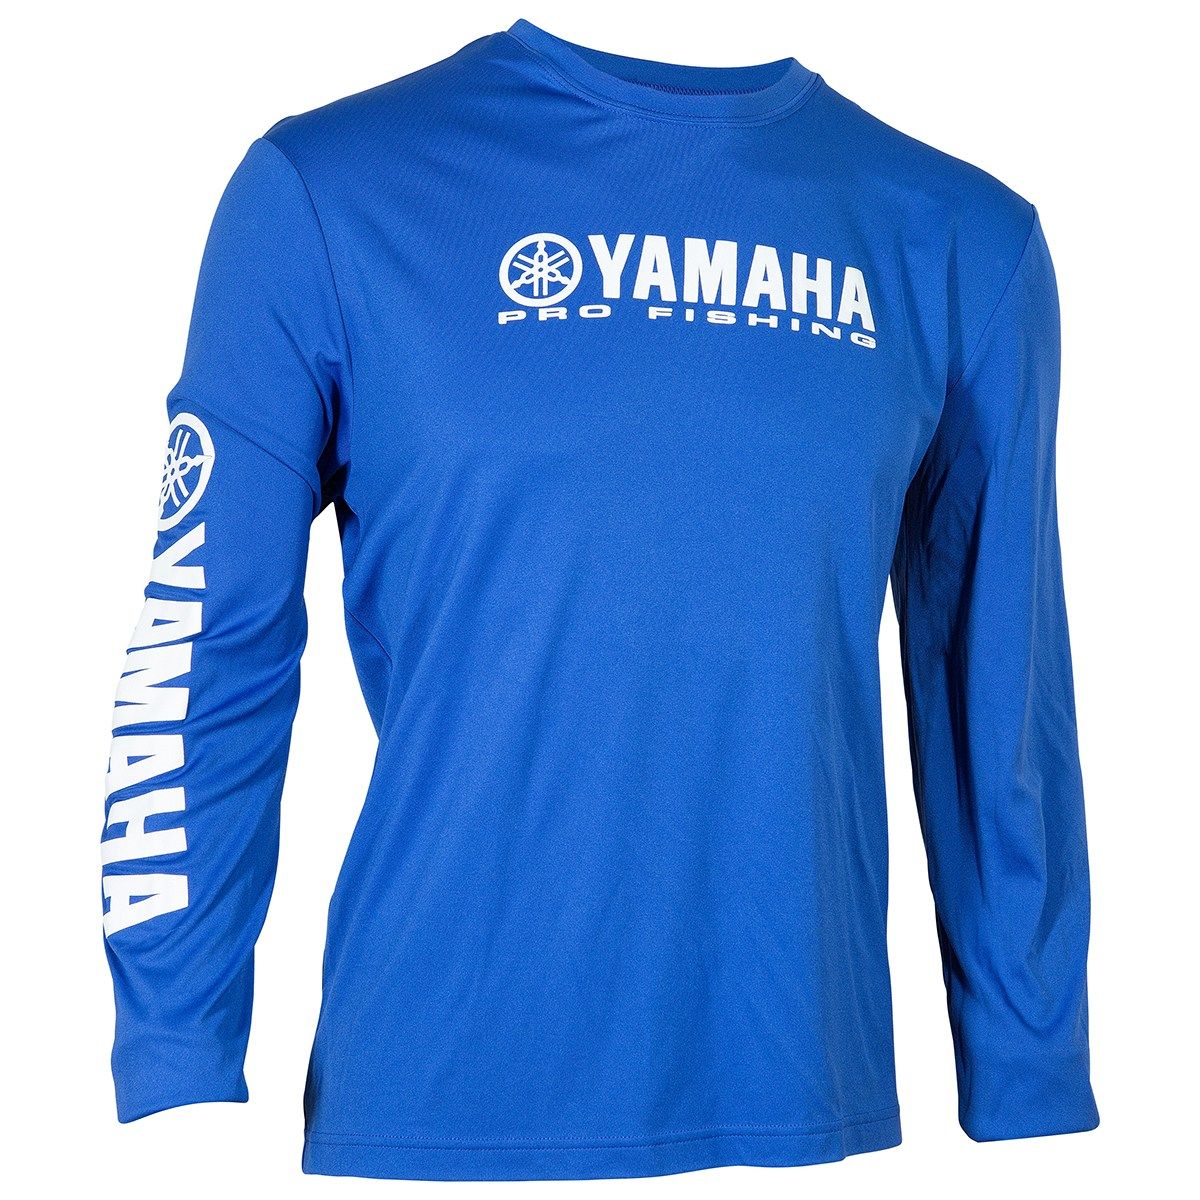 New Yamaha Moisture Wicking Long Sleeve Blue T-Shirt